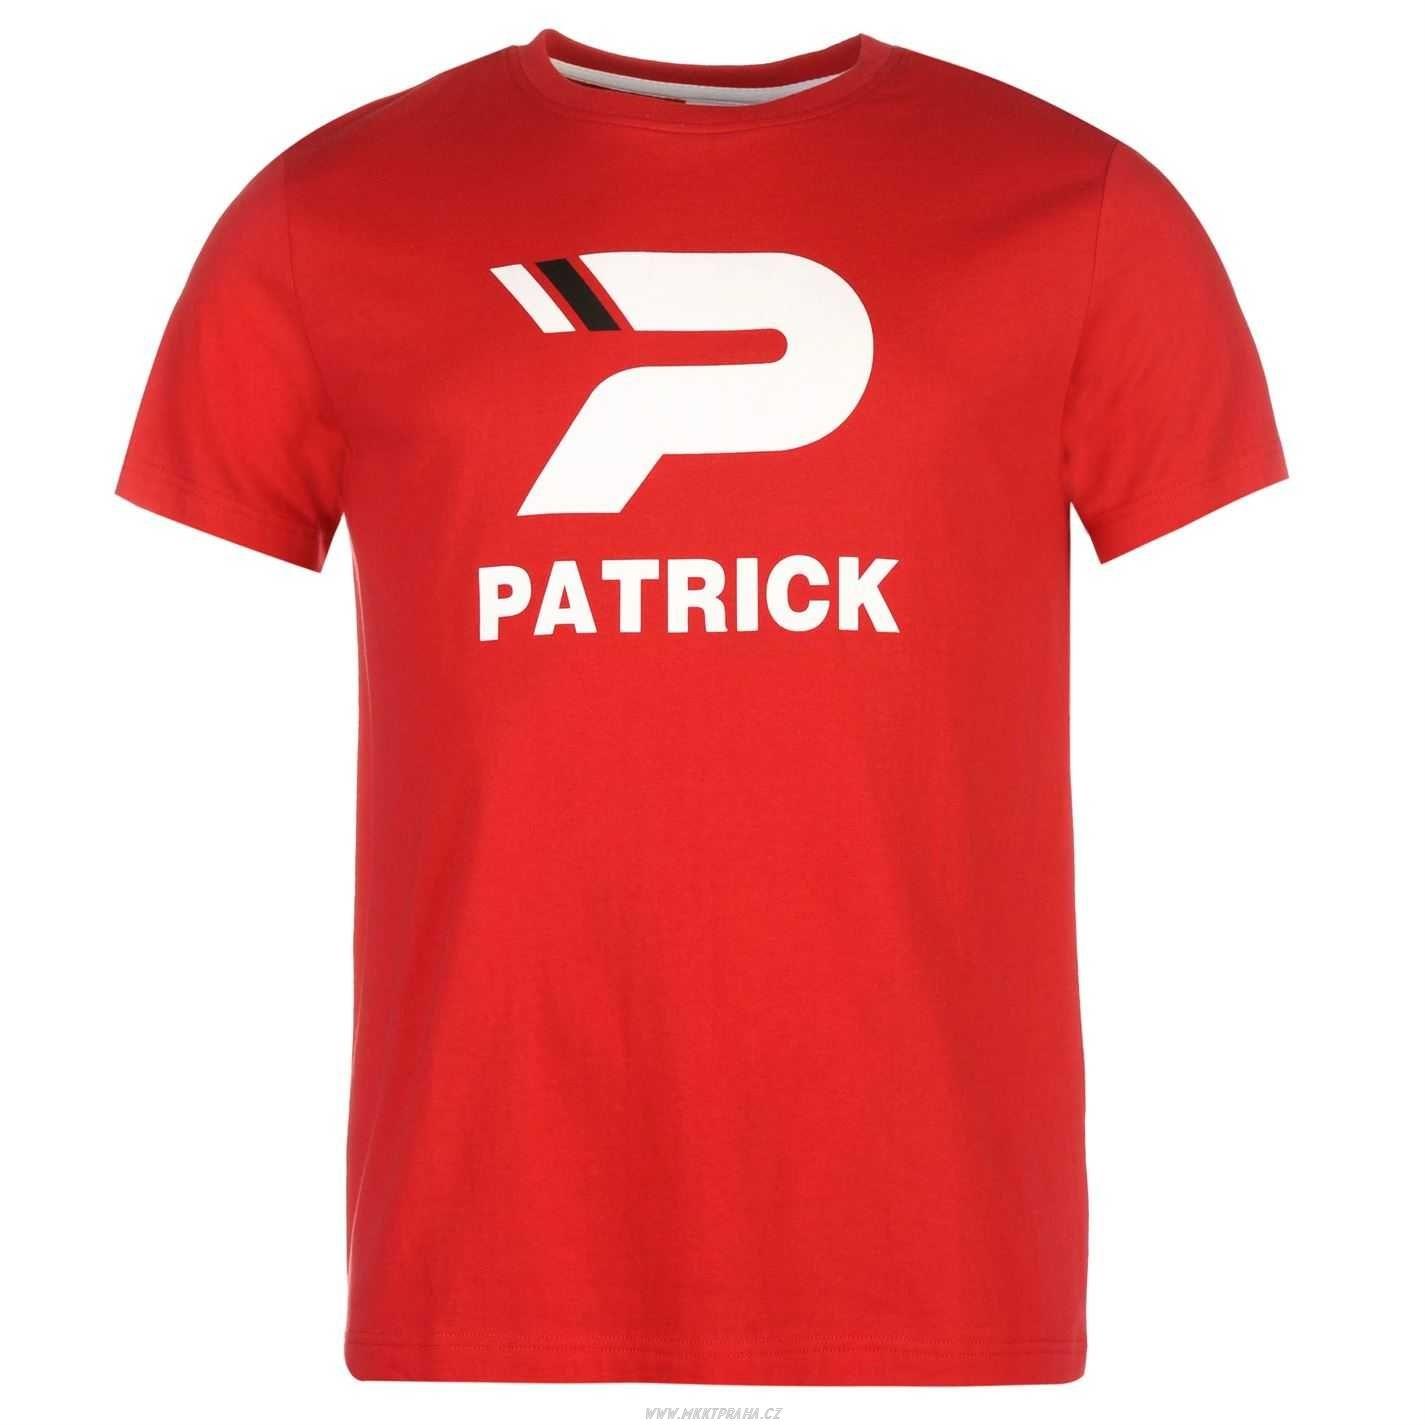 Patrick Logo - Trička - Patrick Logo T Shirt Mens Red - český:GYW5R22FW25O